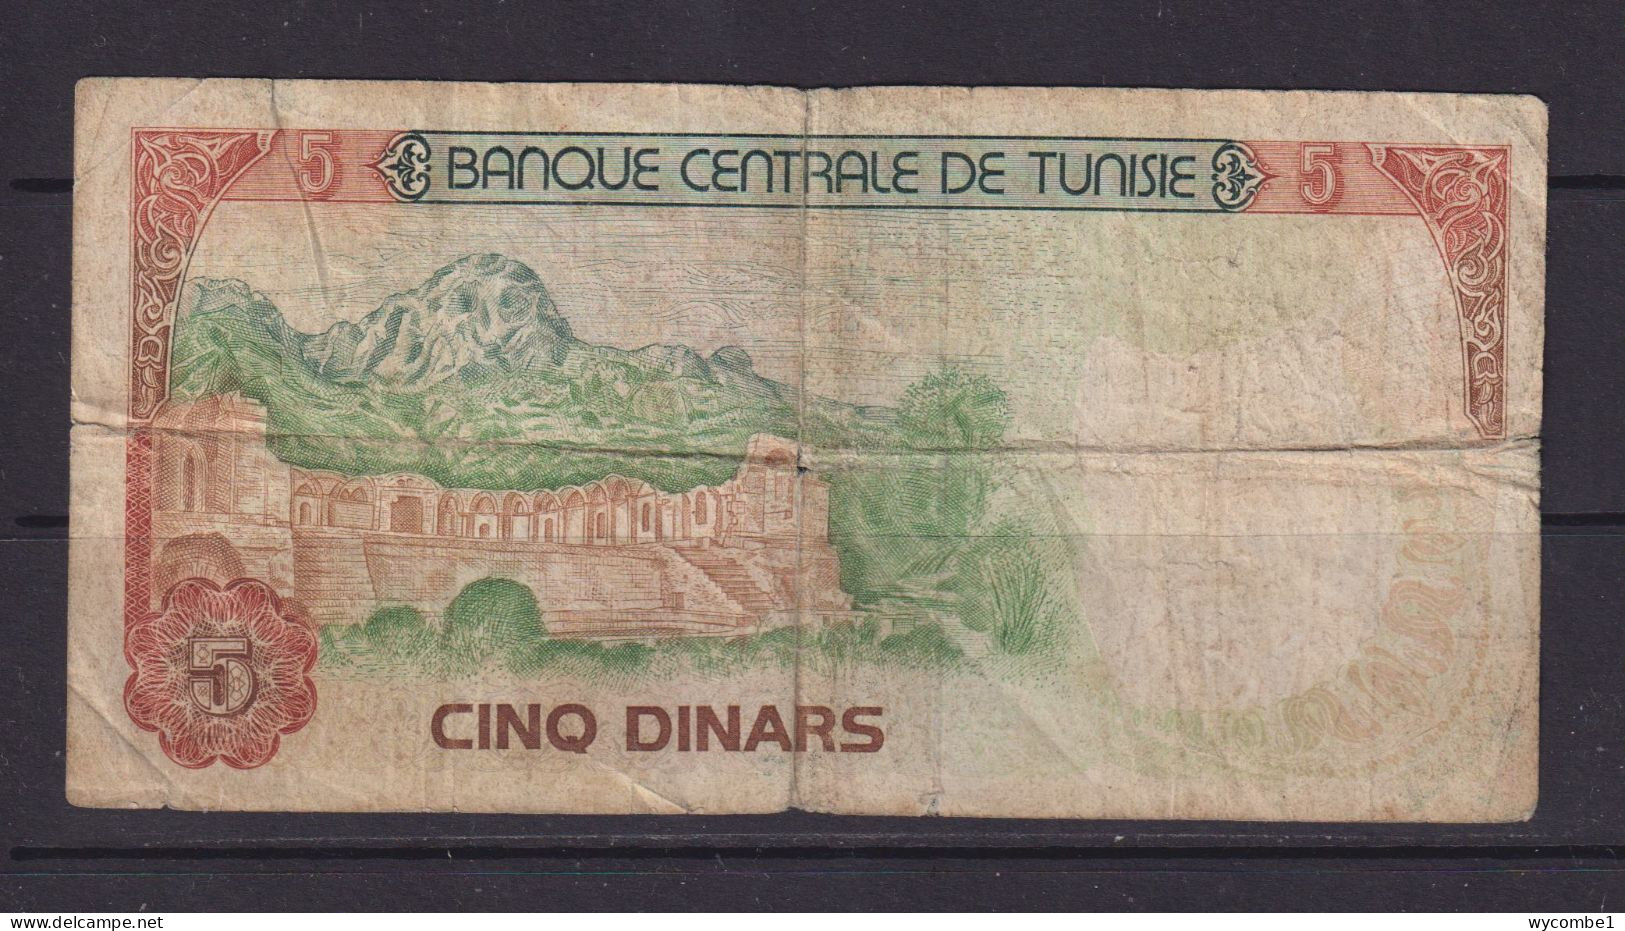 TUNISIA - 1985 5 Dinars Circulated Banknote - Tunesien